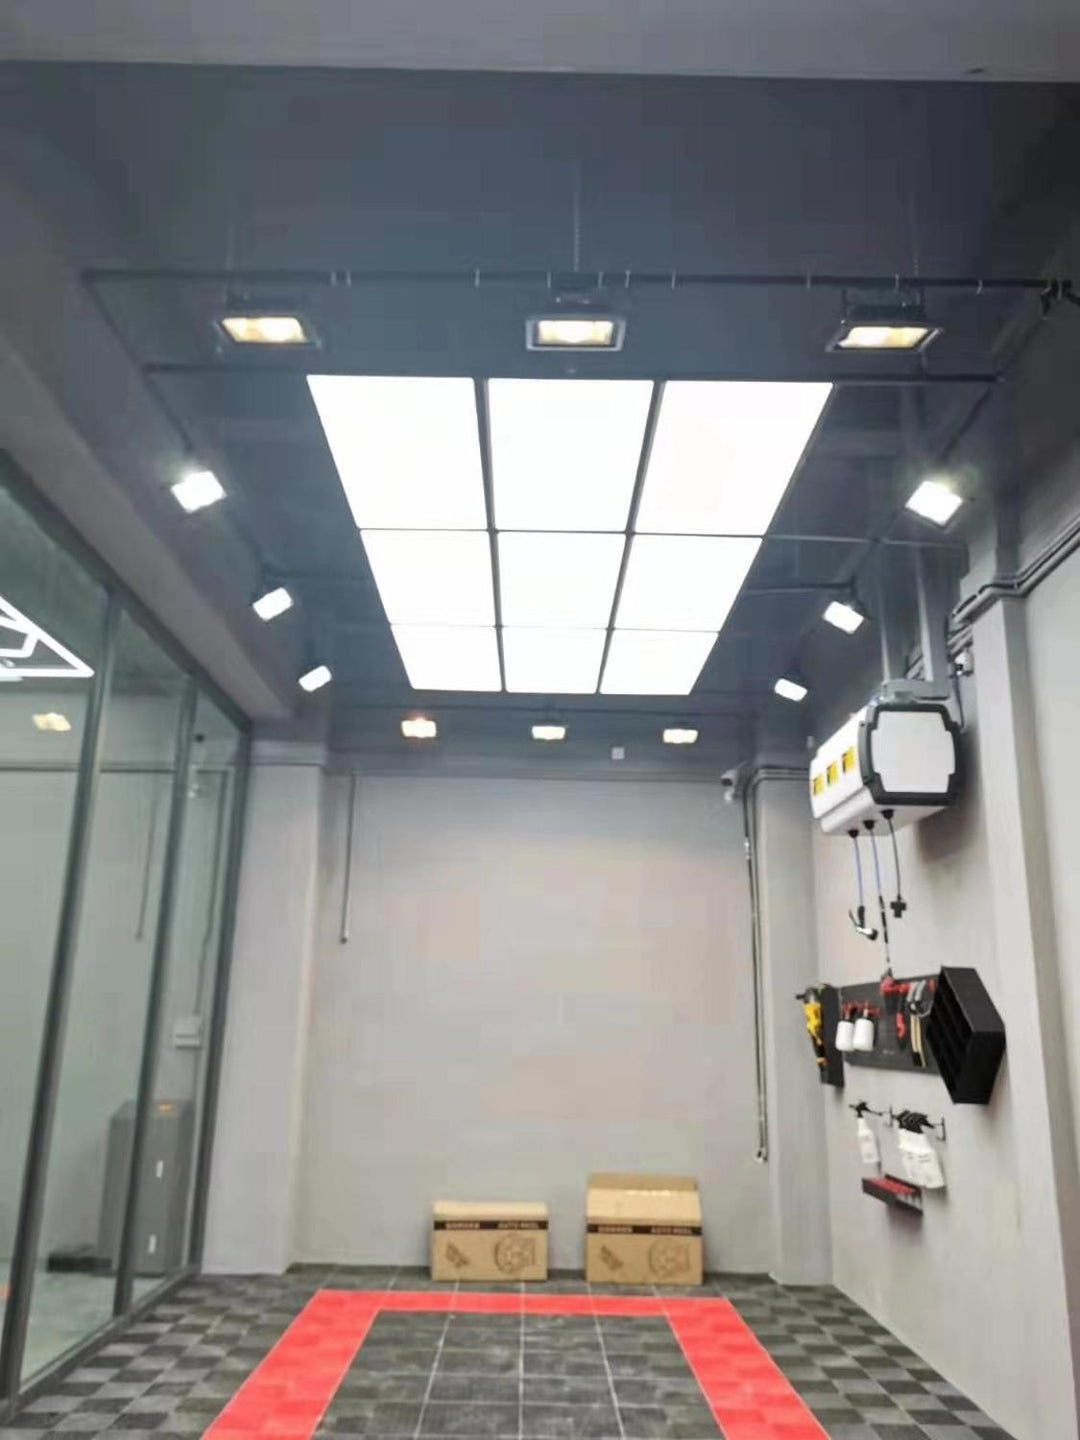 Auto Spa Gantry Lighting: Enhancing Car Wash Stations & Decorative Light Tunnels Ceiling